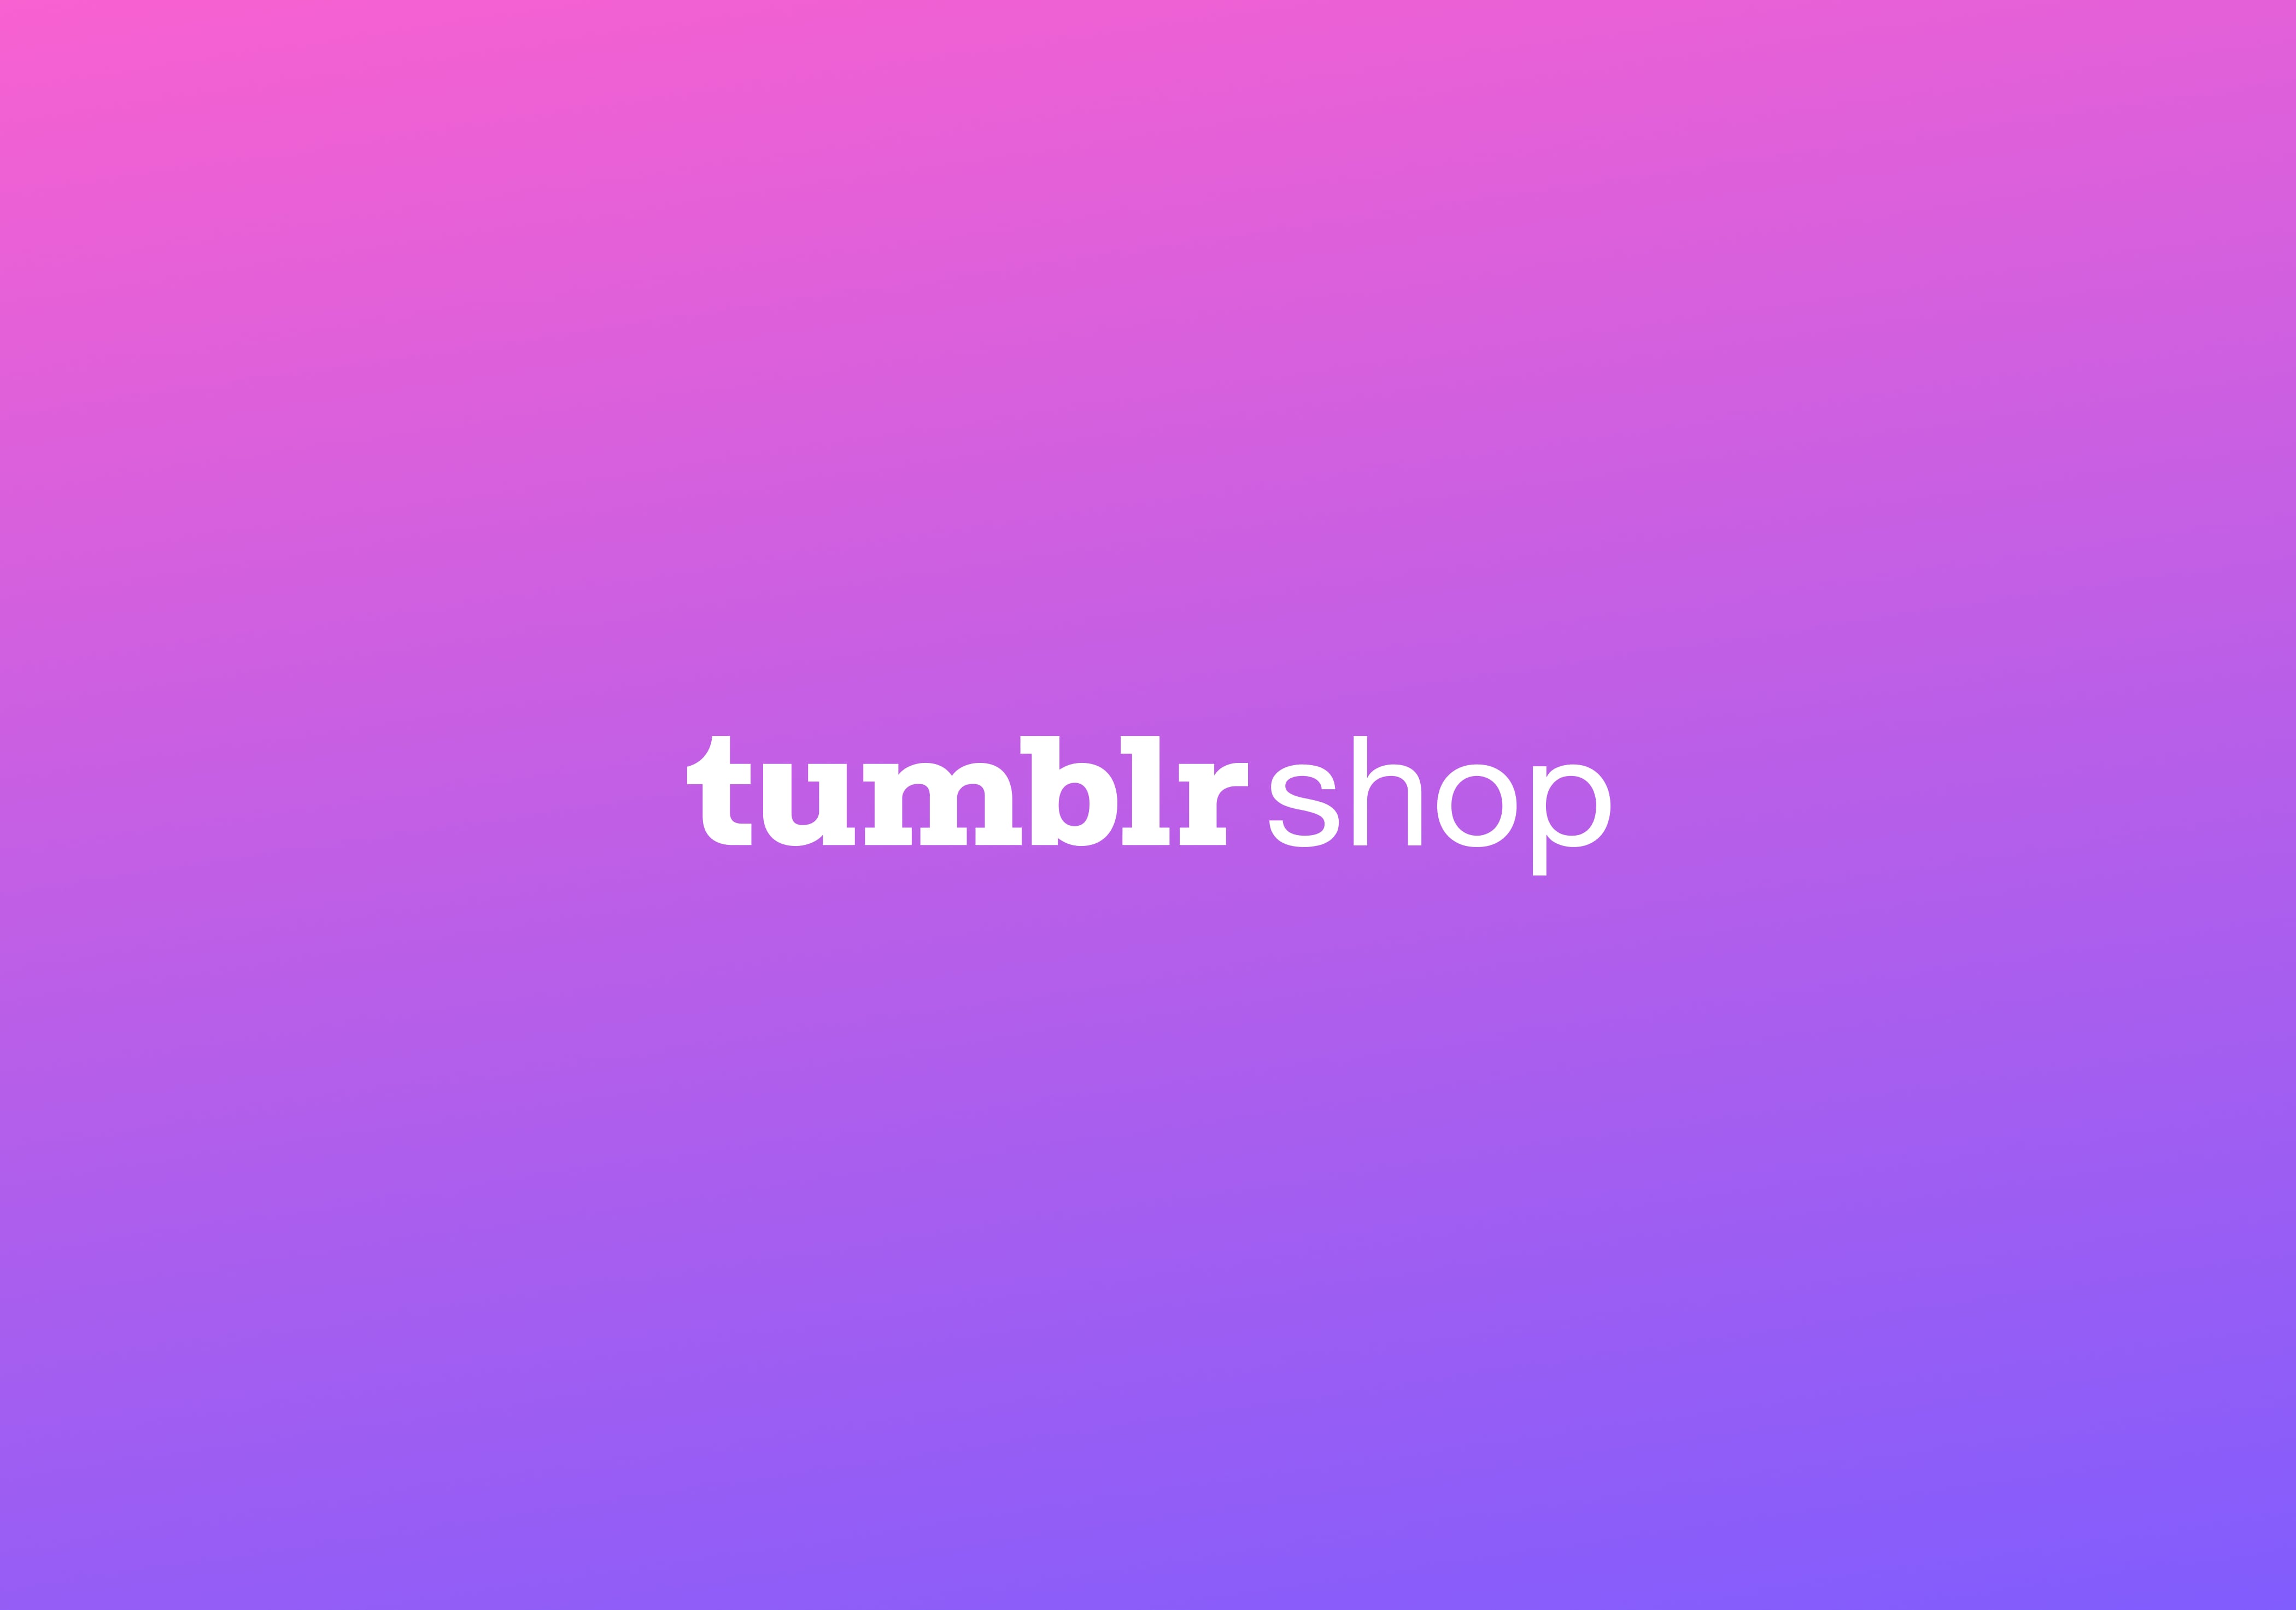 Tumblr Shop